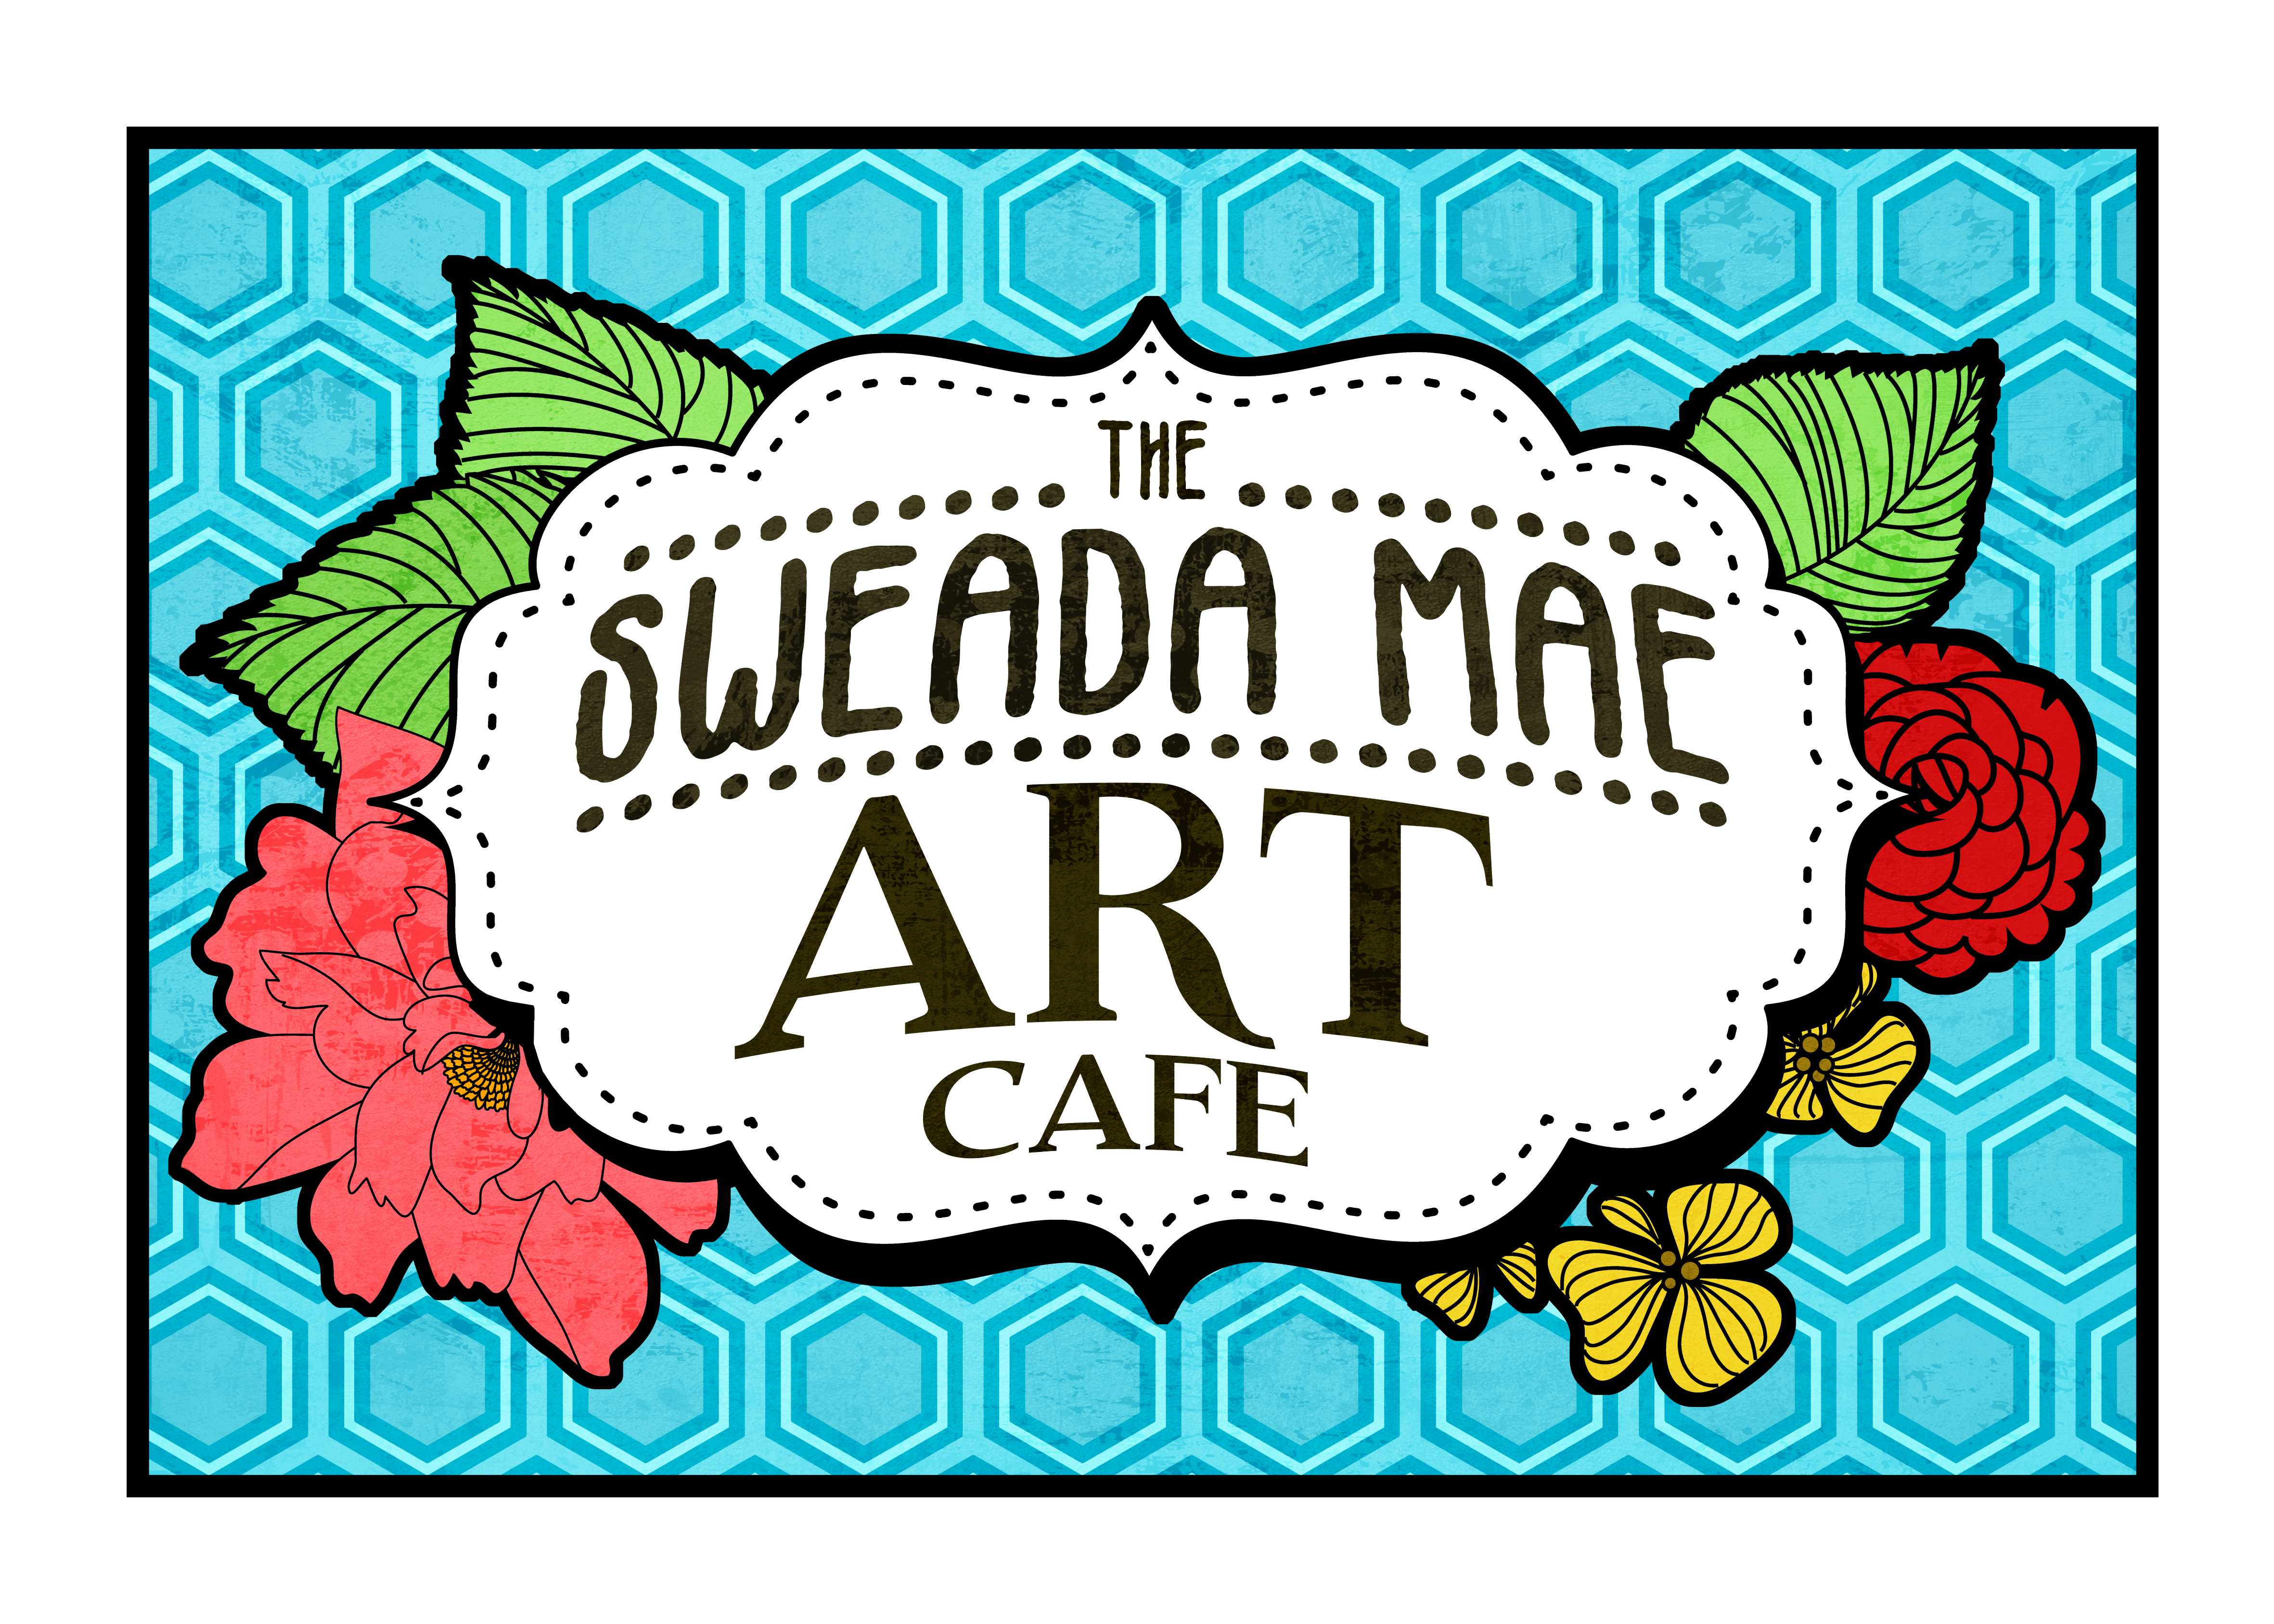 The Sweada Mae Art Cafe logo